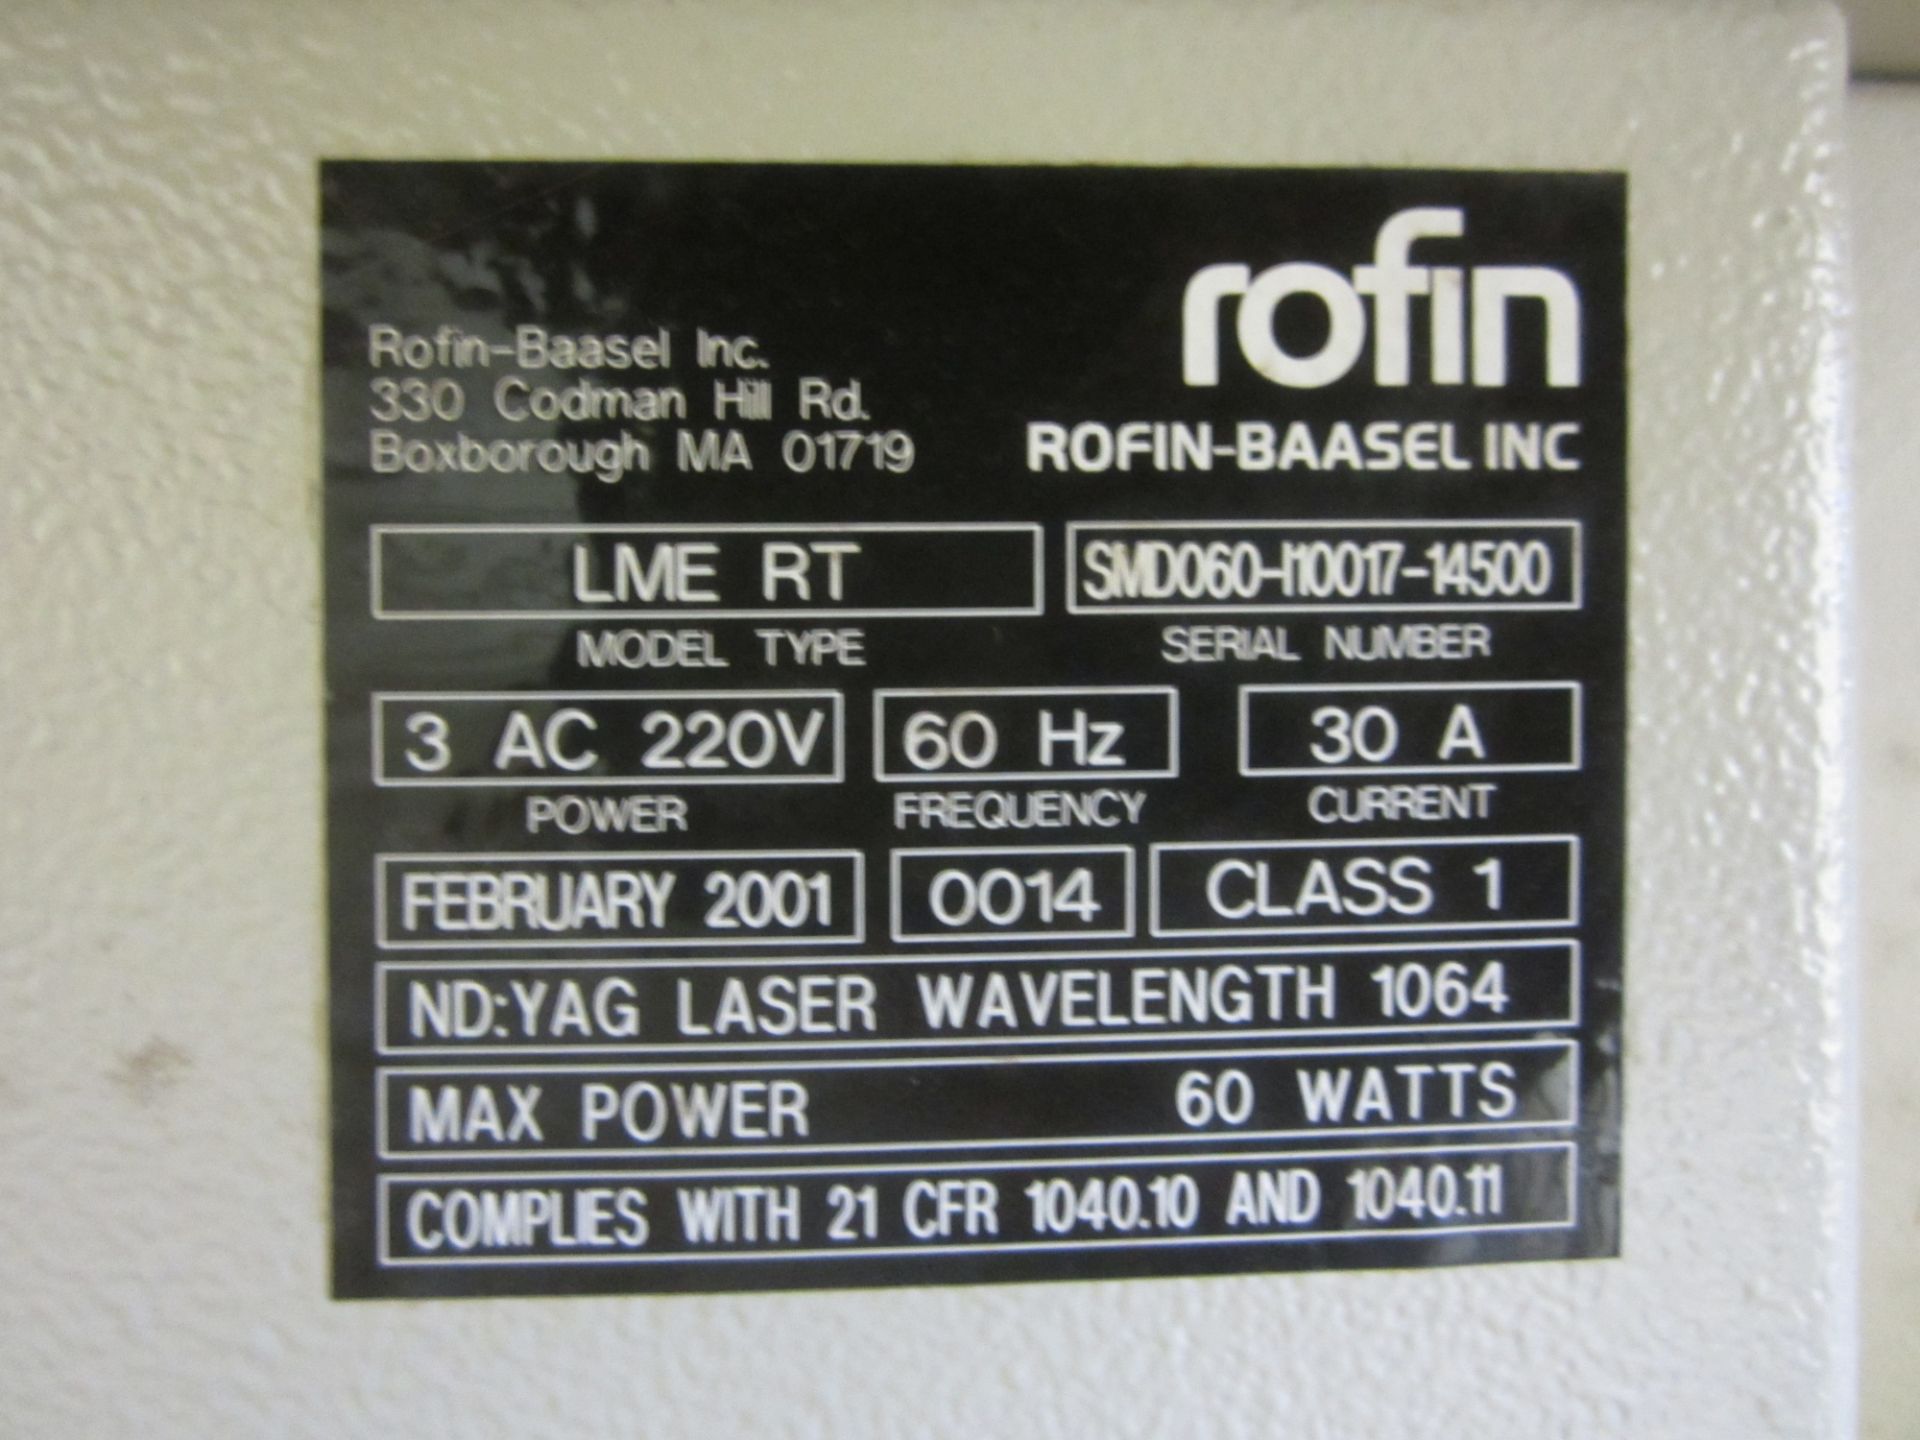 Rofin Model LME-RT Laser Parts Marker, 100 Watt, Dual Table, s/n SMD-060-10017-14500 - Image 10 of 10